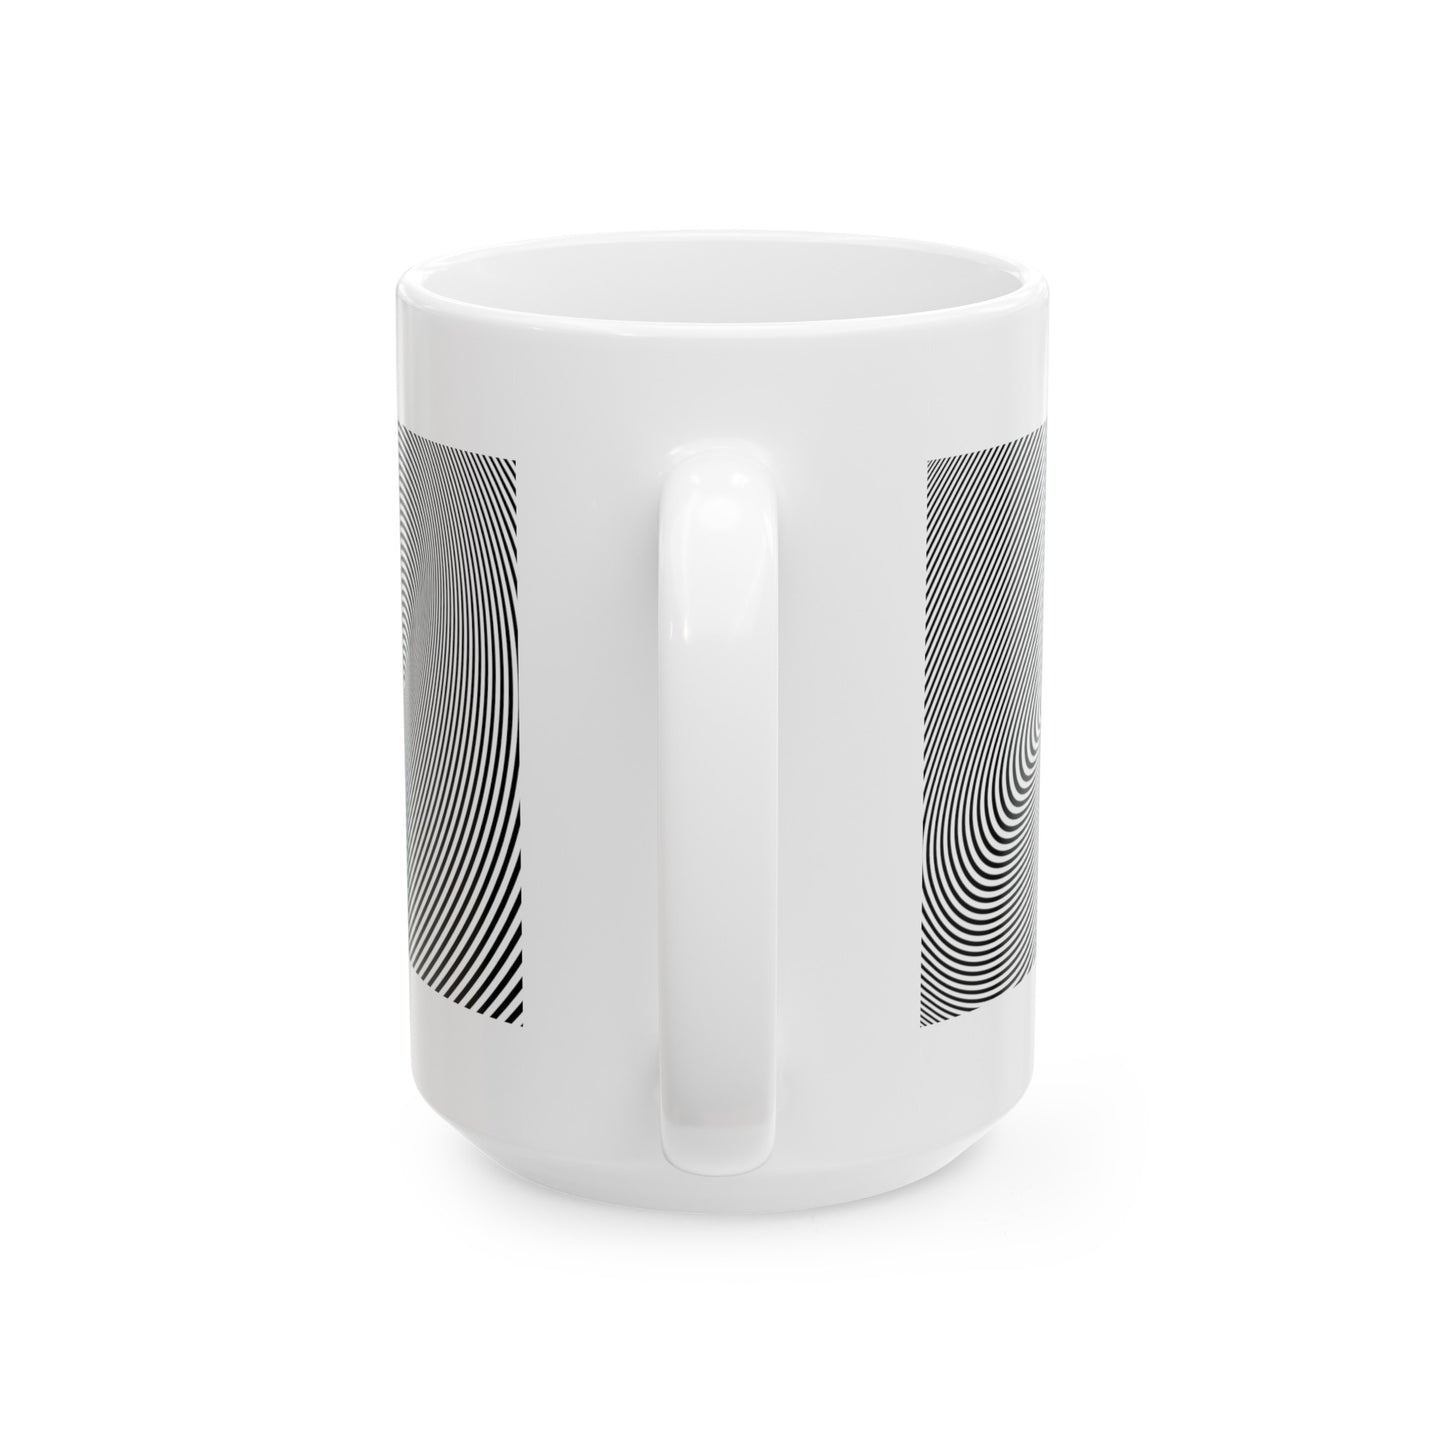 Spiral Illusion Coffee Mug - Double Sided White Ceramic 15oz by TheGlassyLass.com